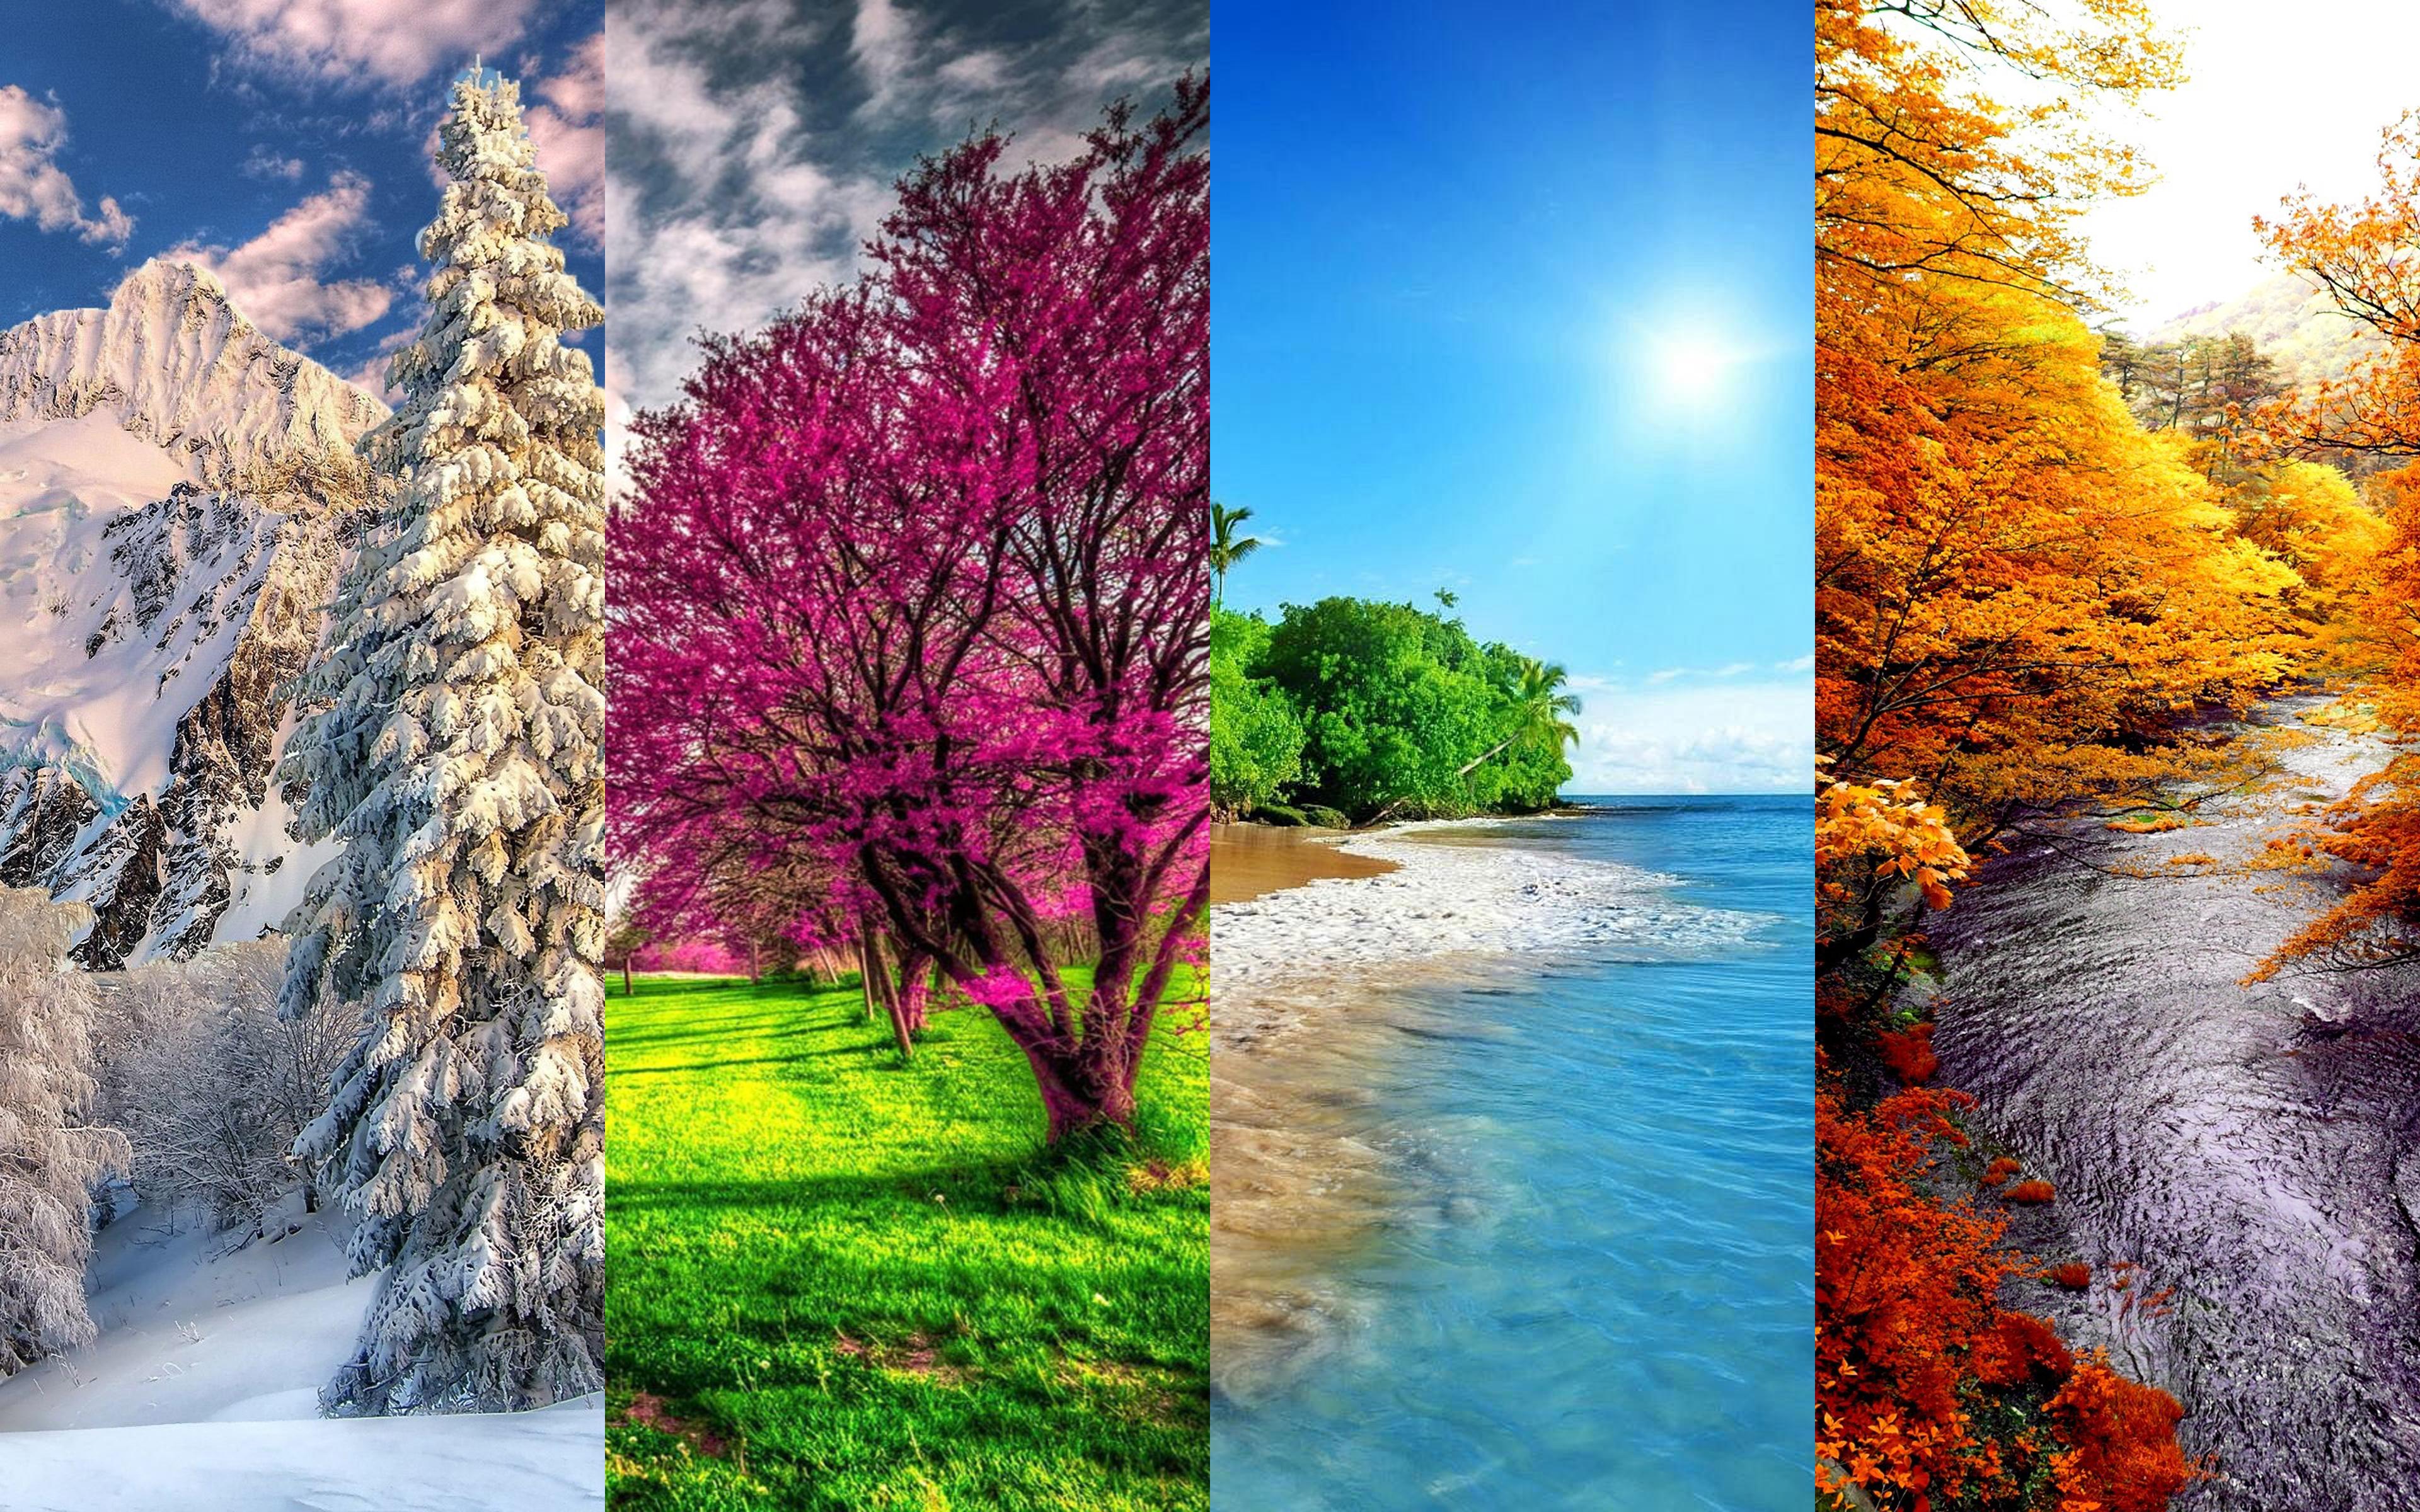 Download wallpaper 4 seasons, 4K, winter, spring, summer, autumn